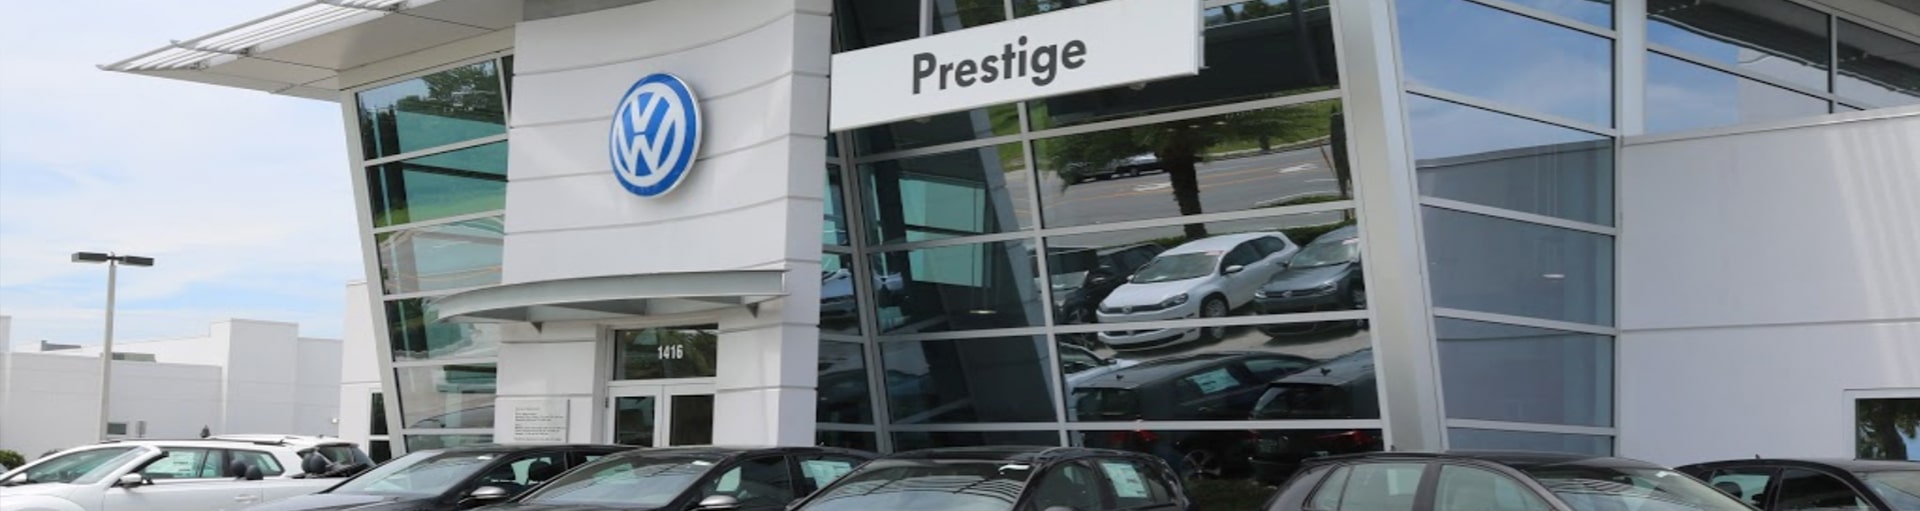 Prestige Volkswagen of Melbourne Multi-Point Inspection Service